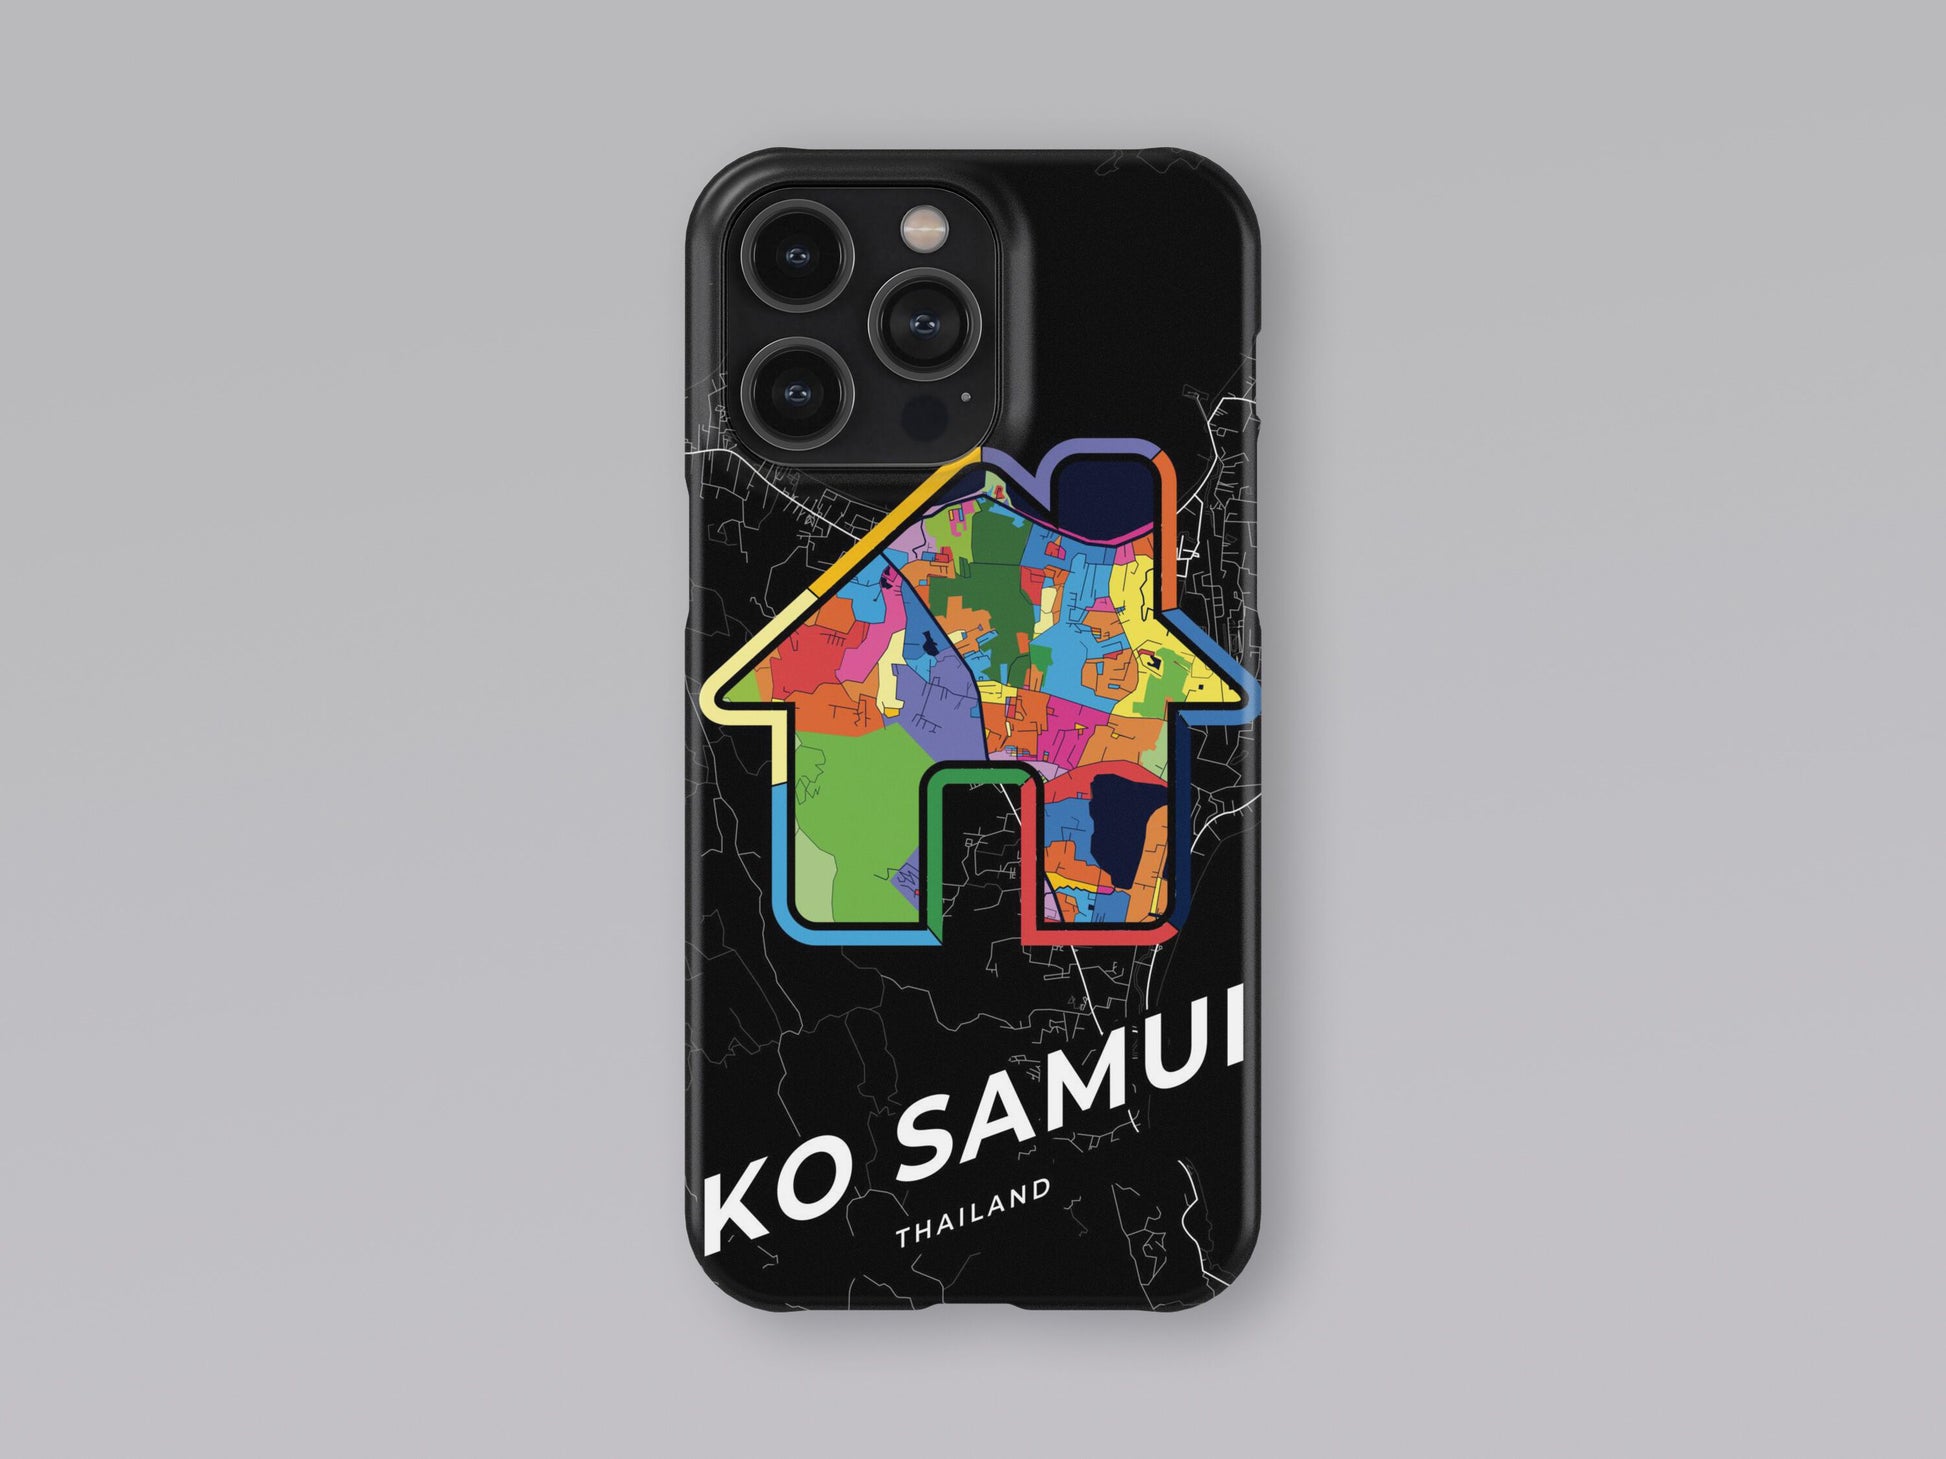 Ko Samui Thailand slim phone case with colorful icon. Birthday, wedding or housewarming gift. Couple match cases. 3